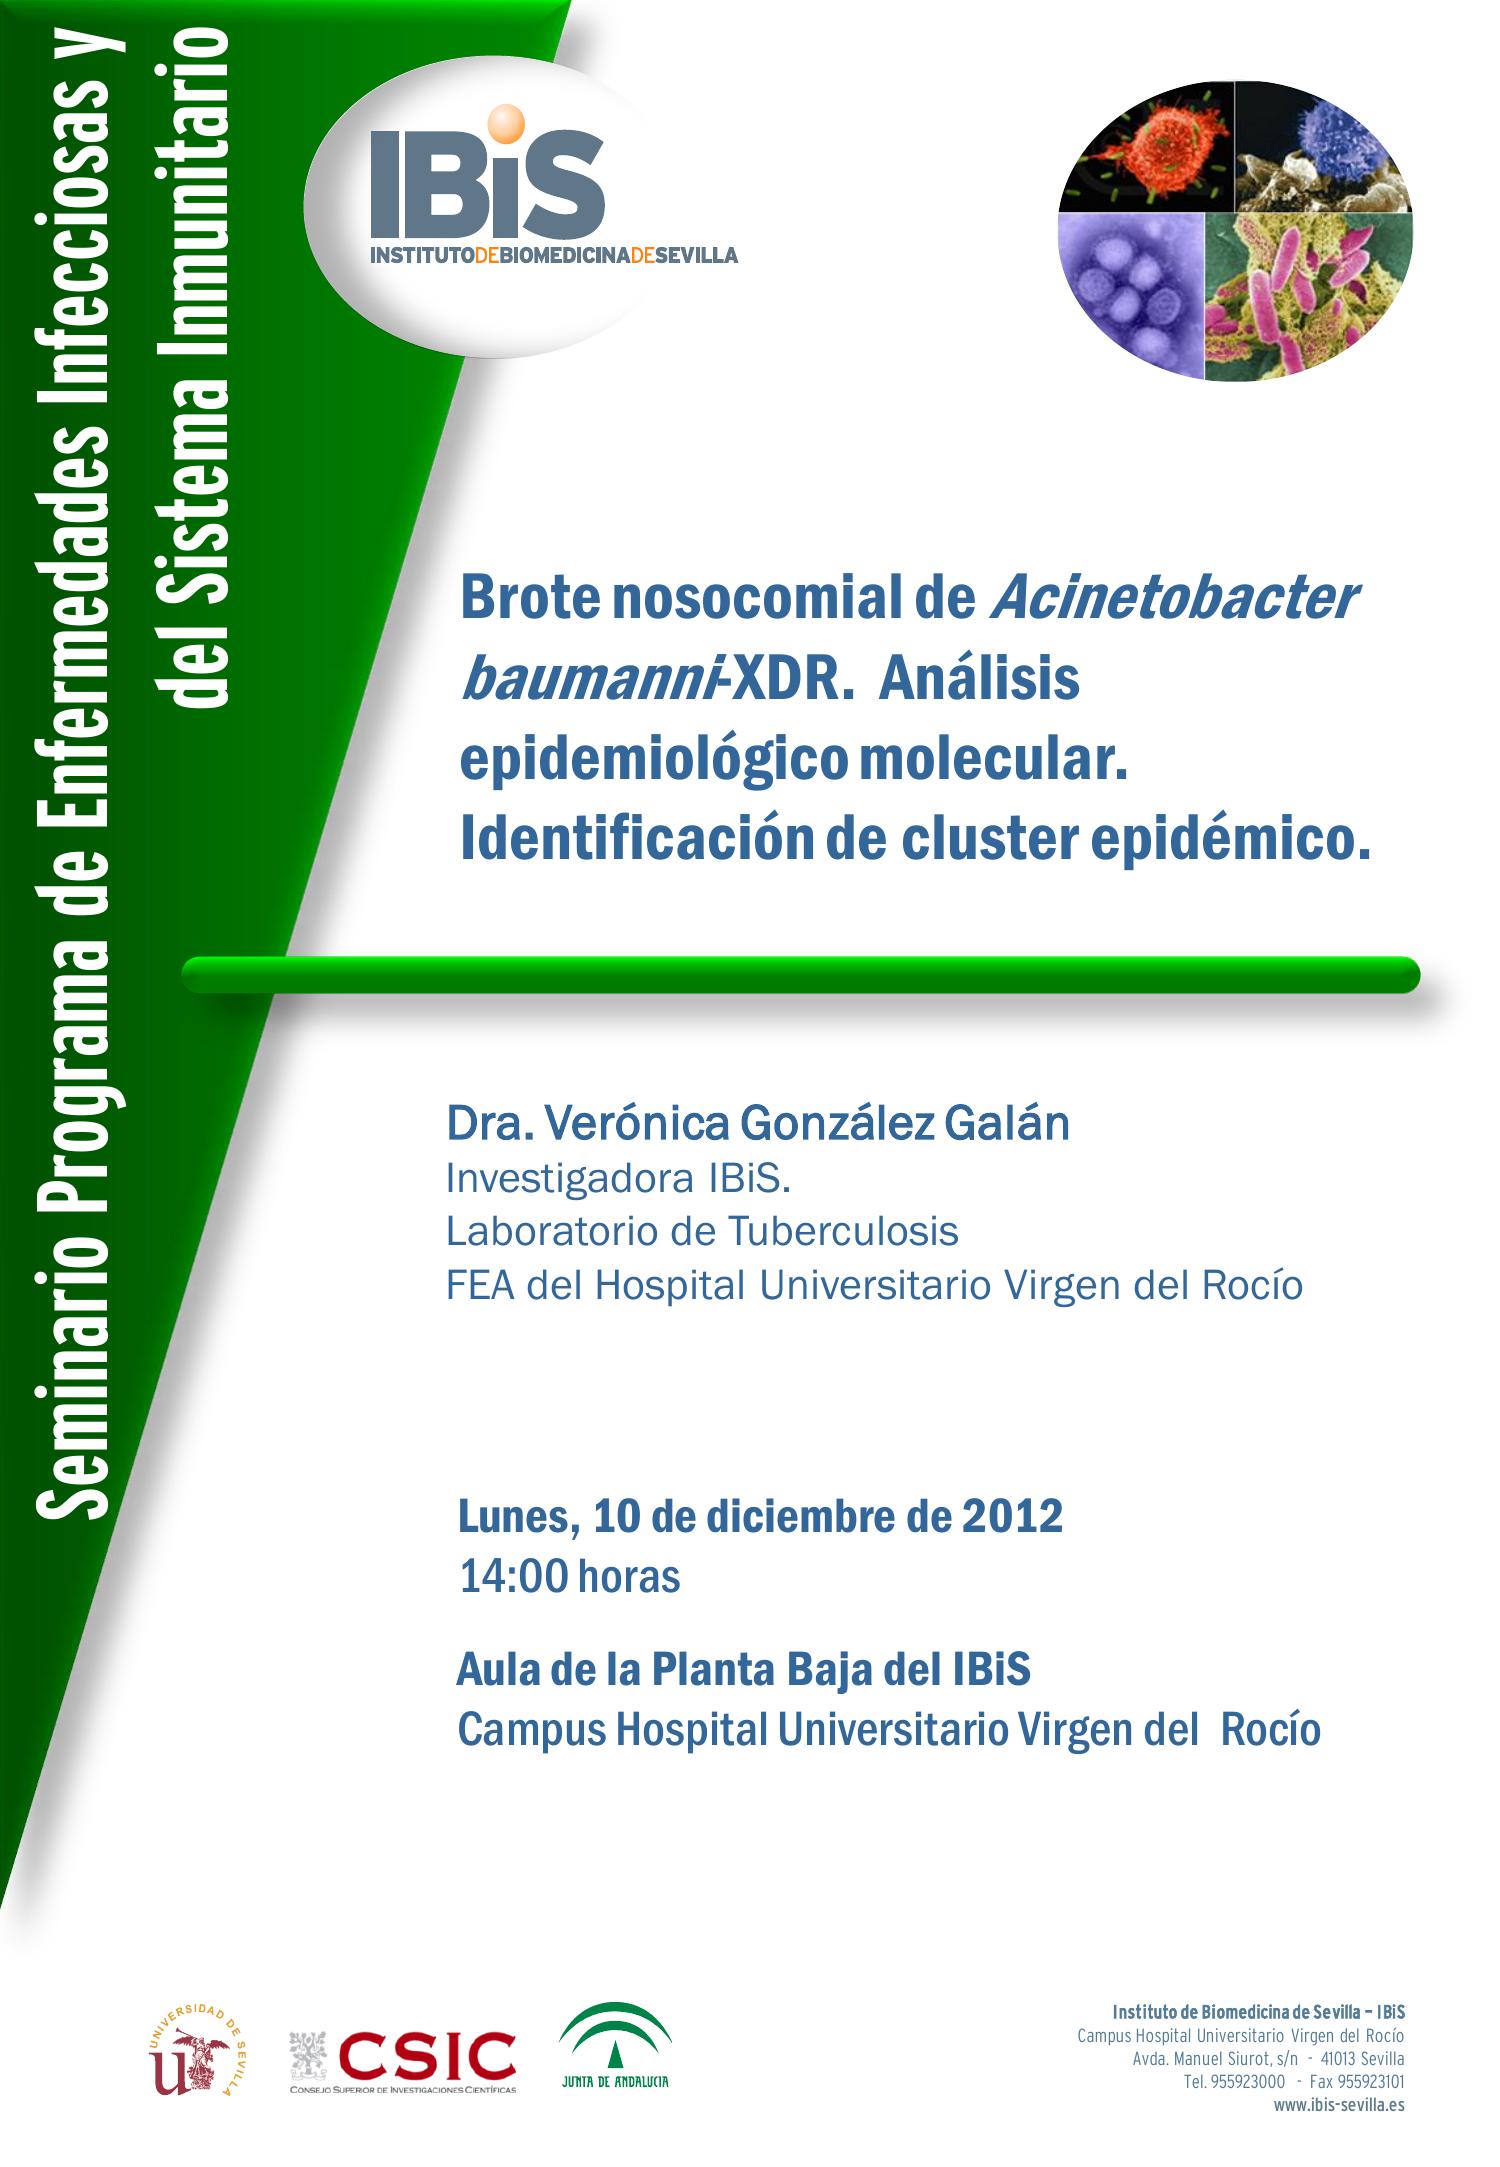 Poster: Brote nosocomial de Acinetobacter baumanni-XDR. Análisis epidemiológico molecular. Identificación de cluster epidémico.